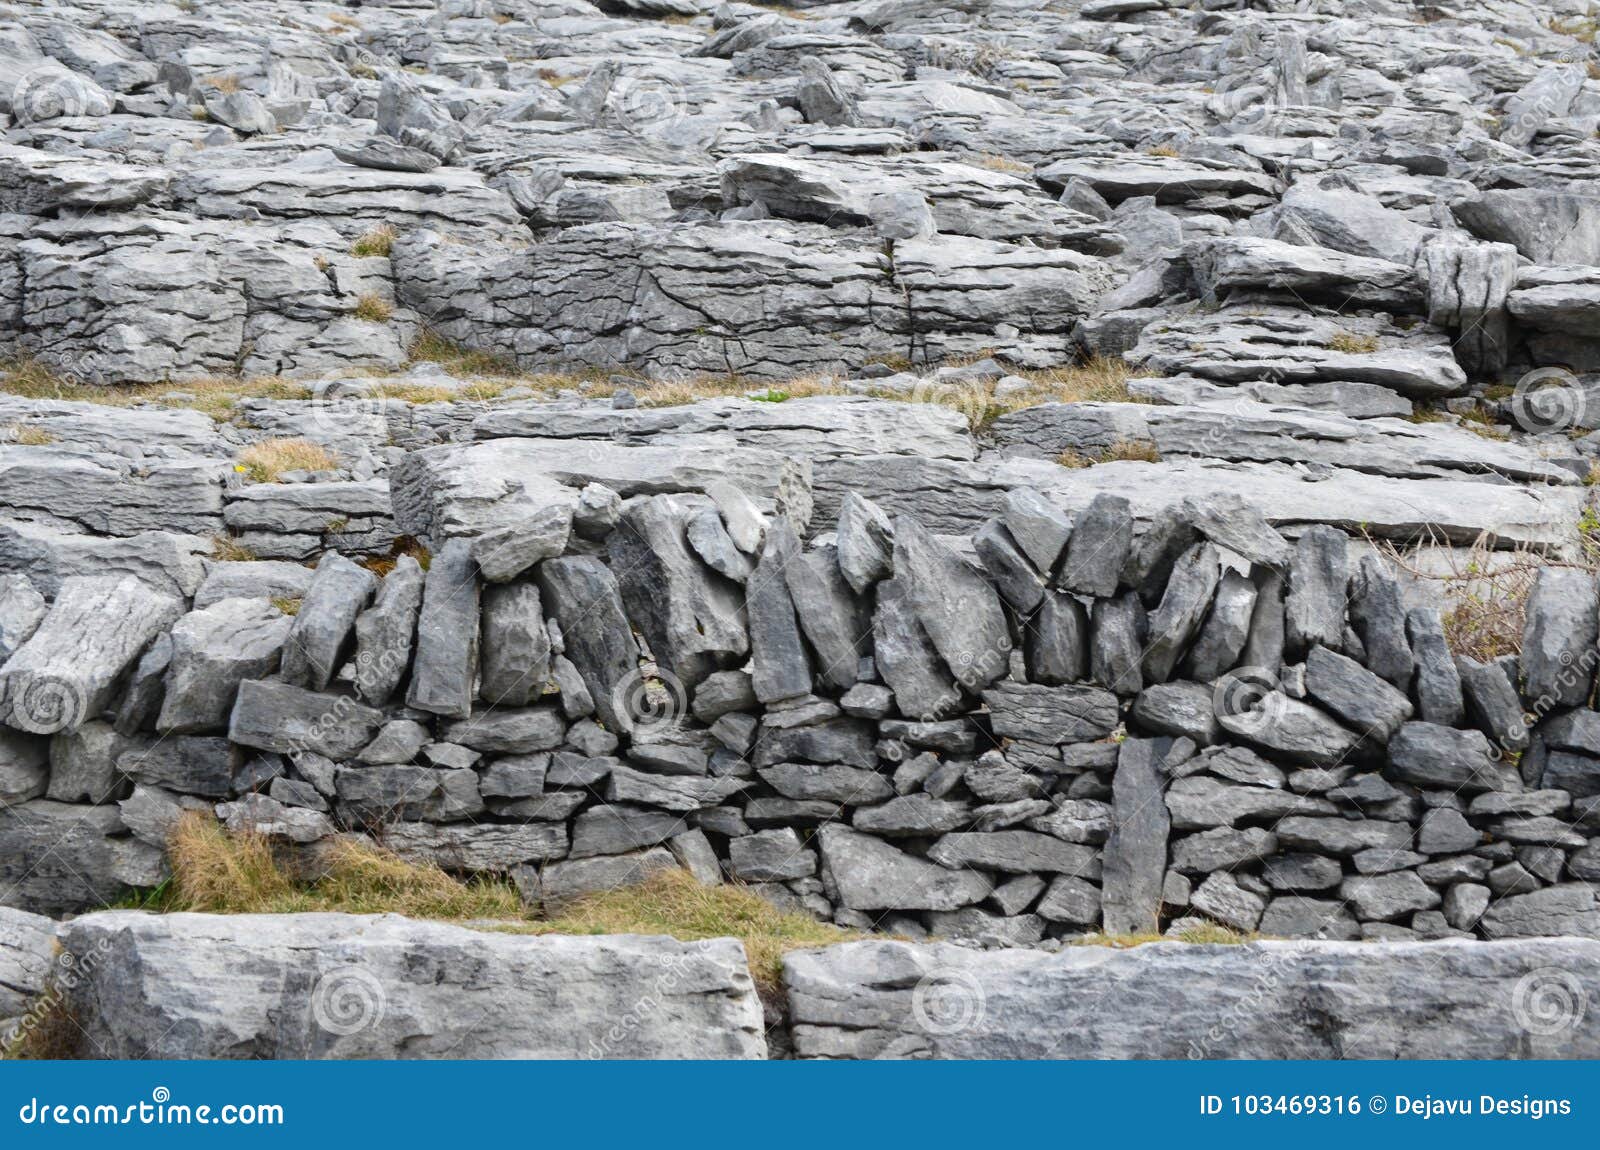 beautiful gray rock wall in burren ireland